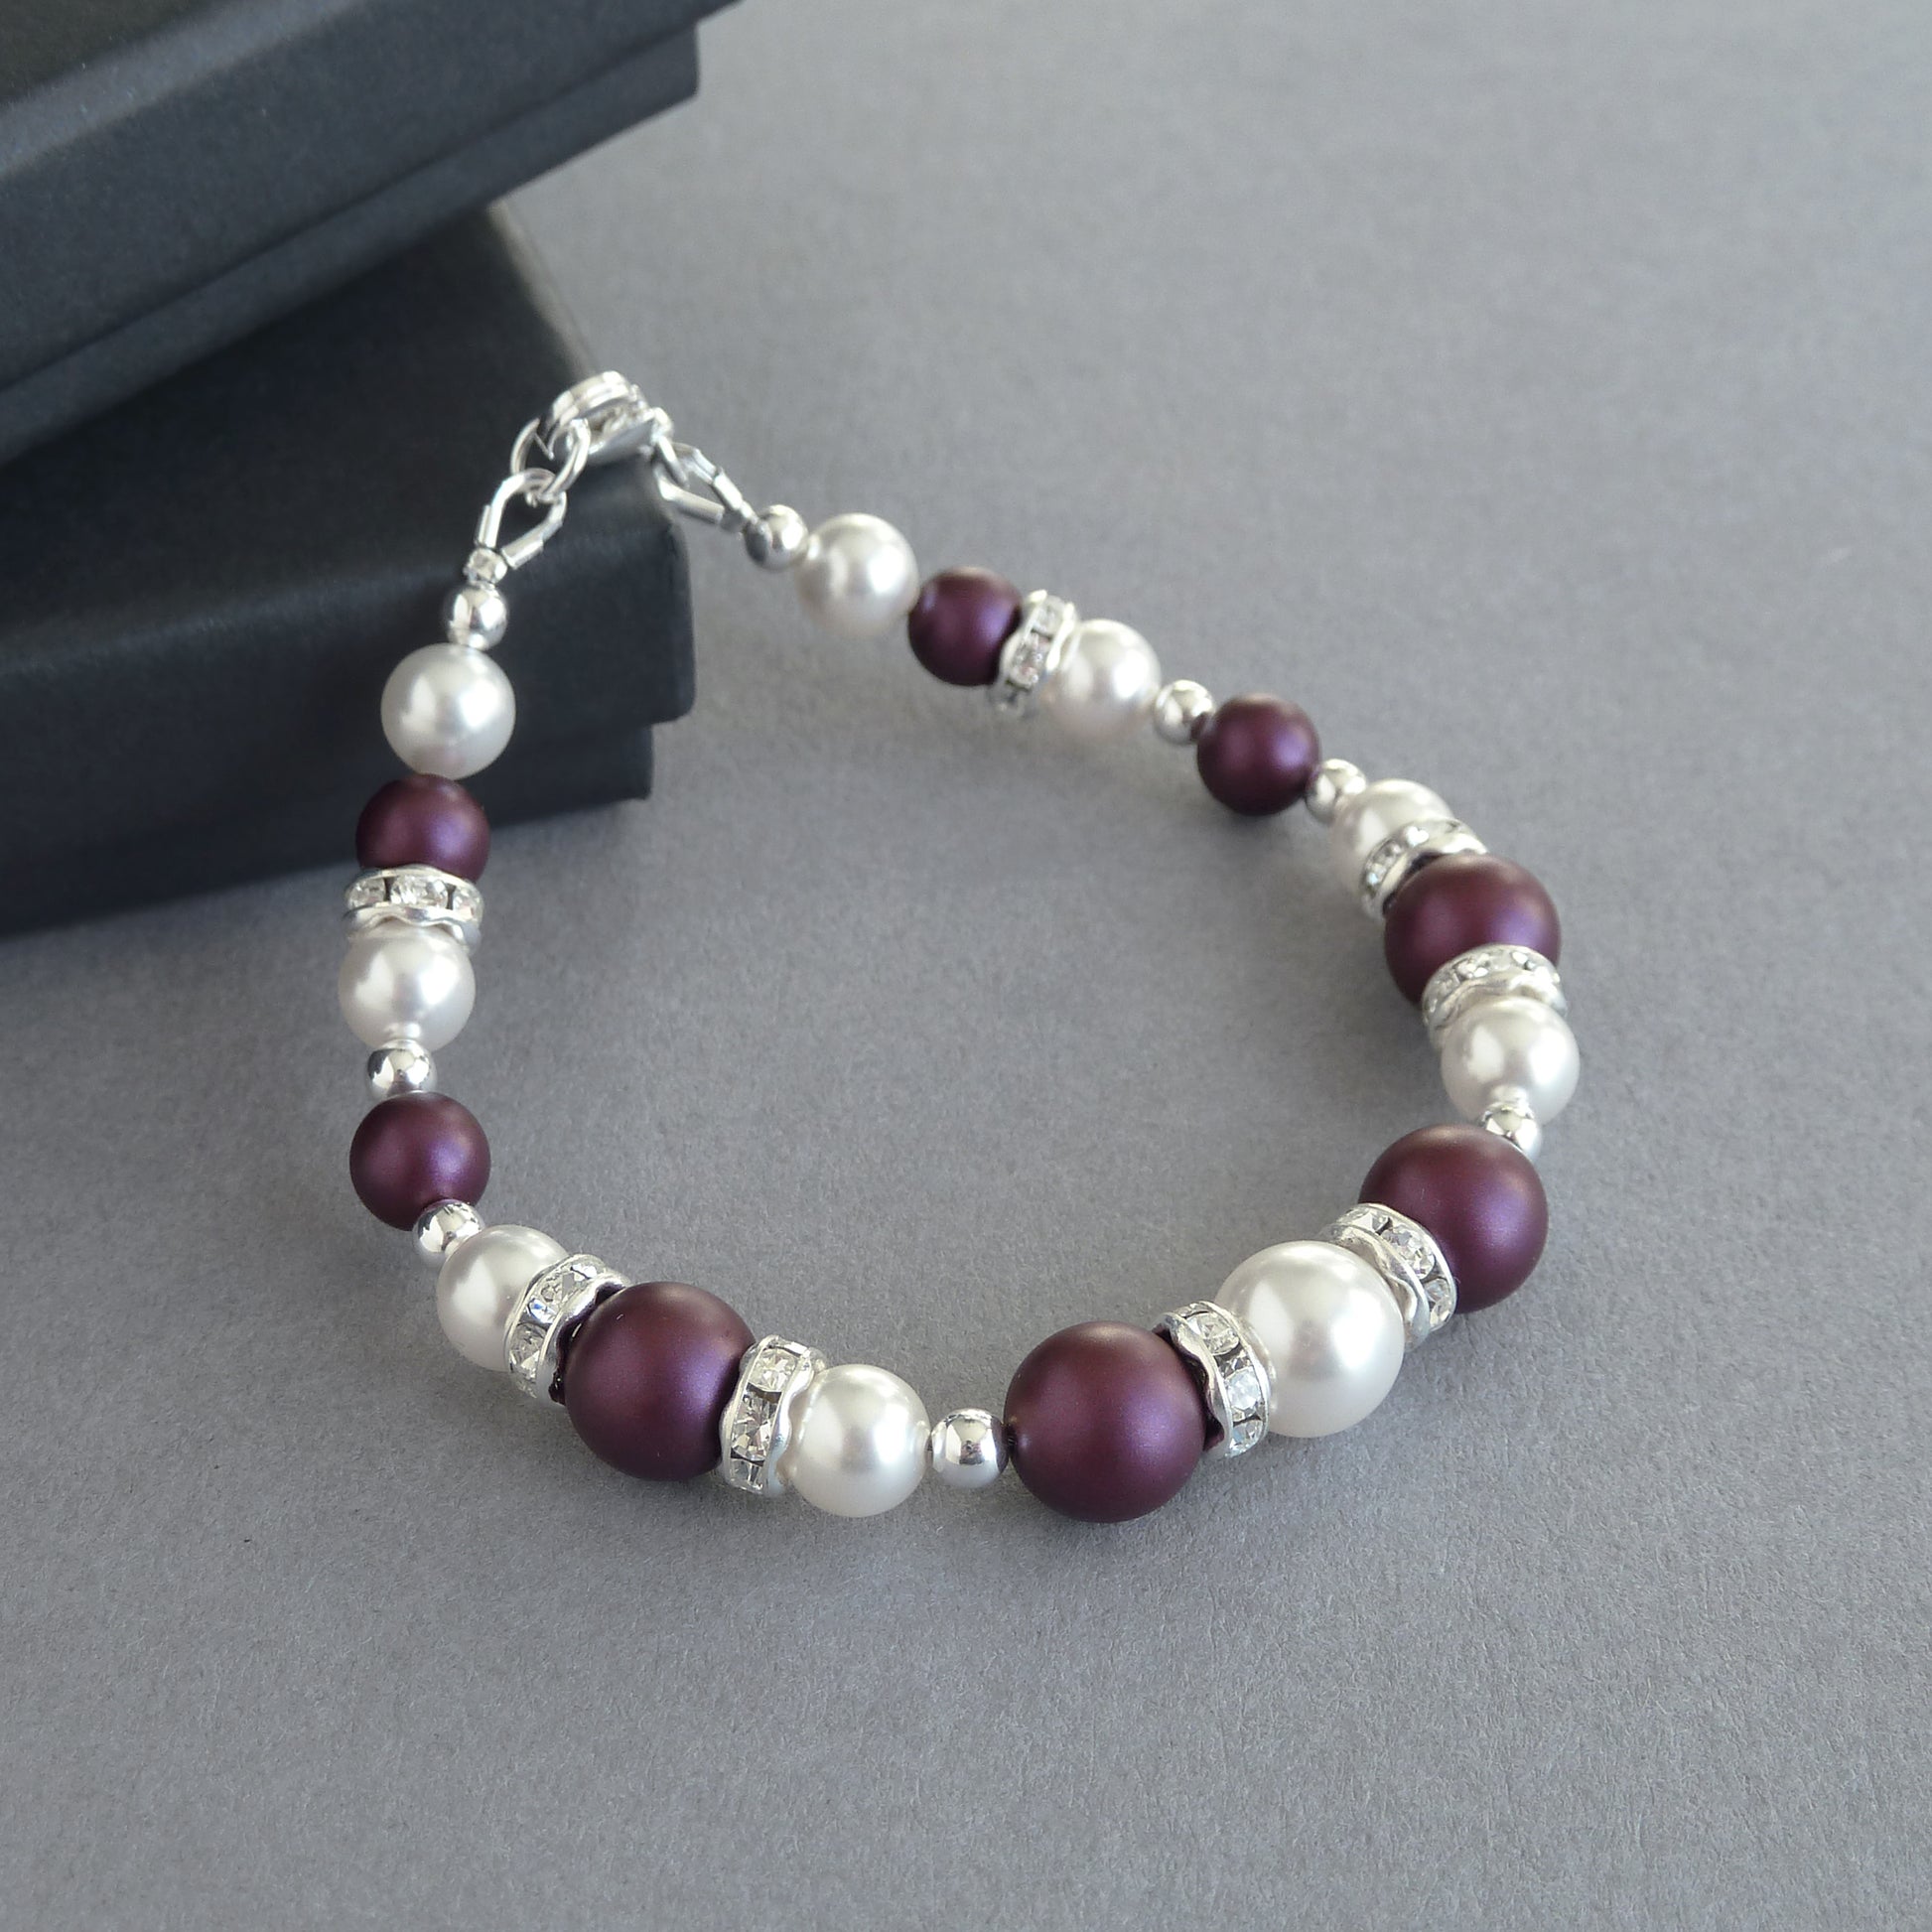 Aubergine pearl bracelet